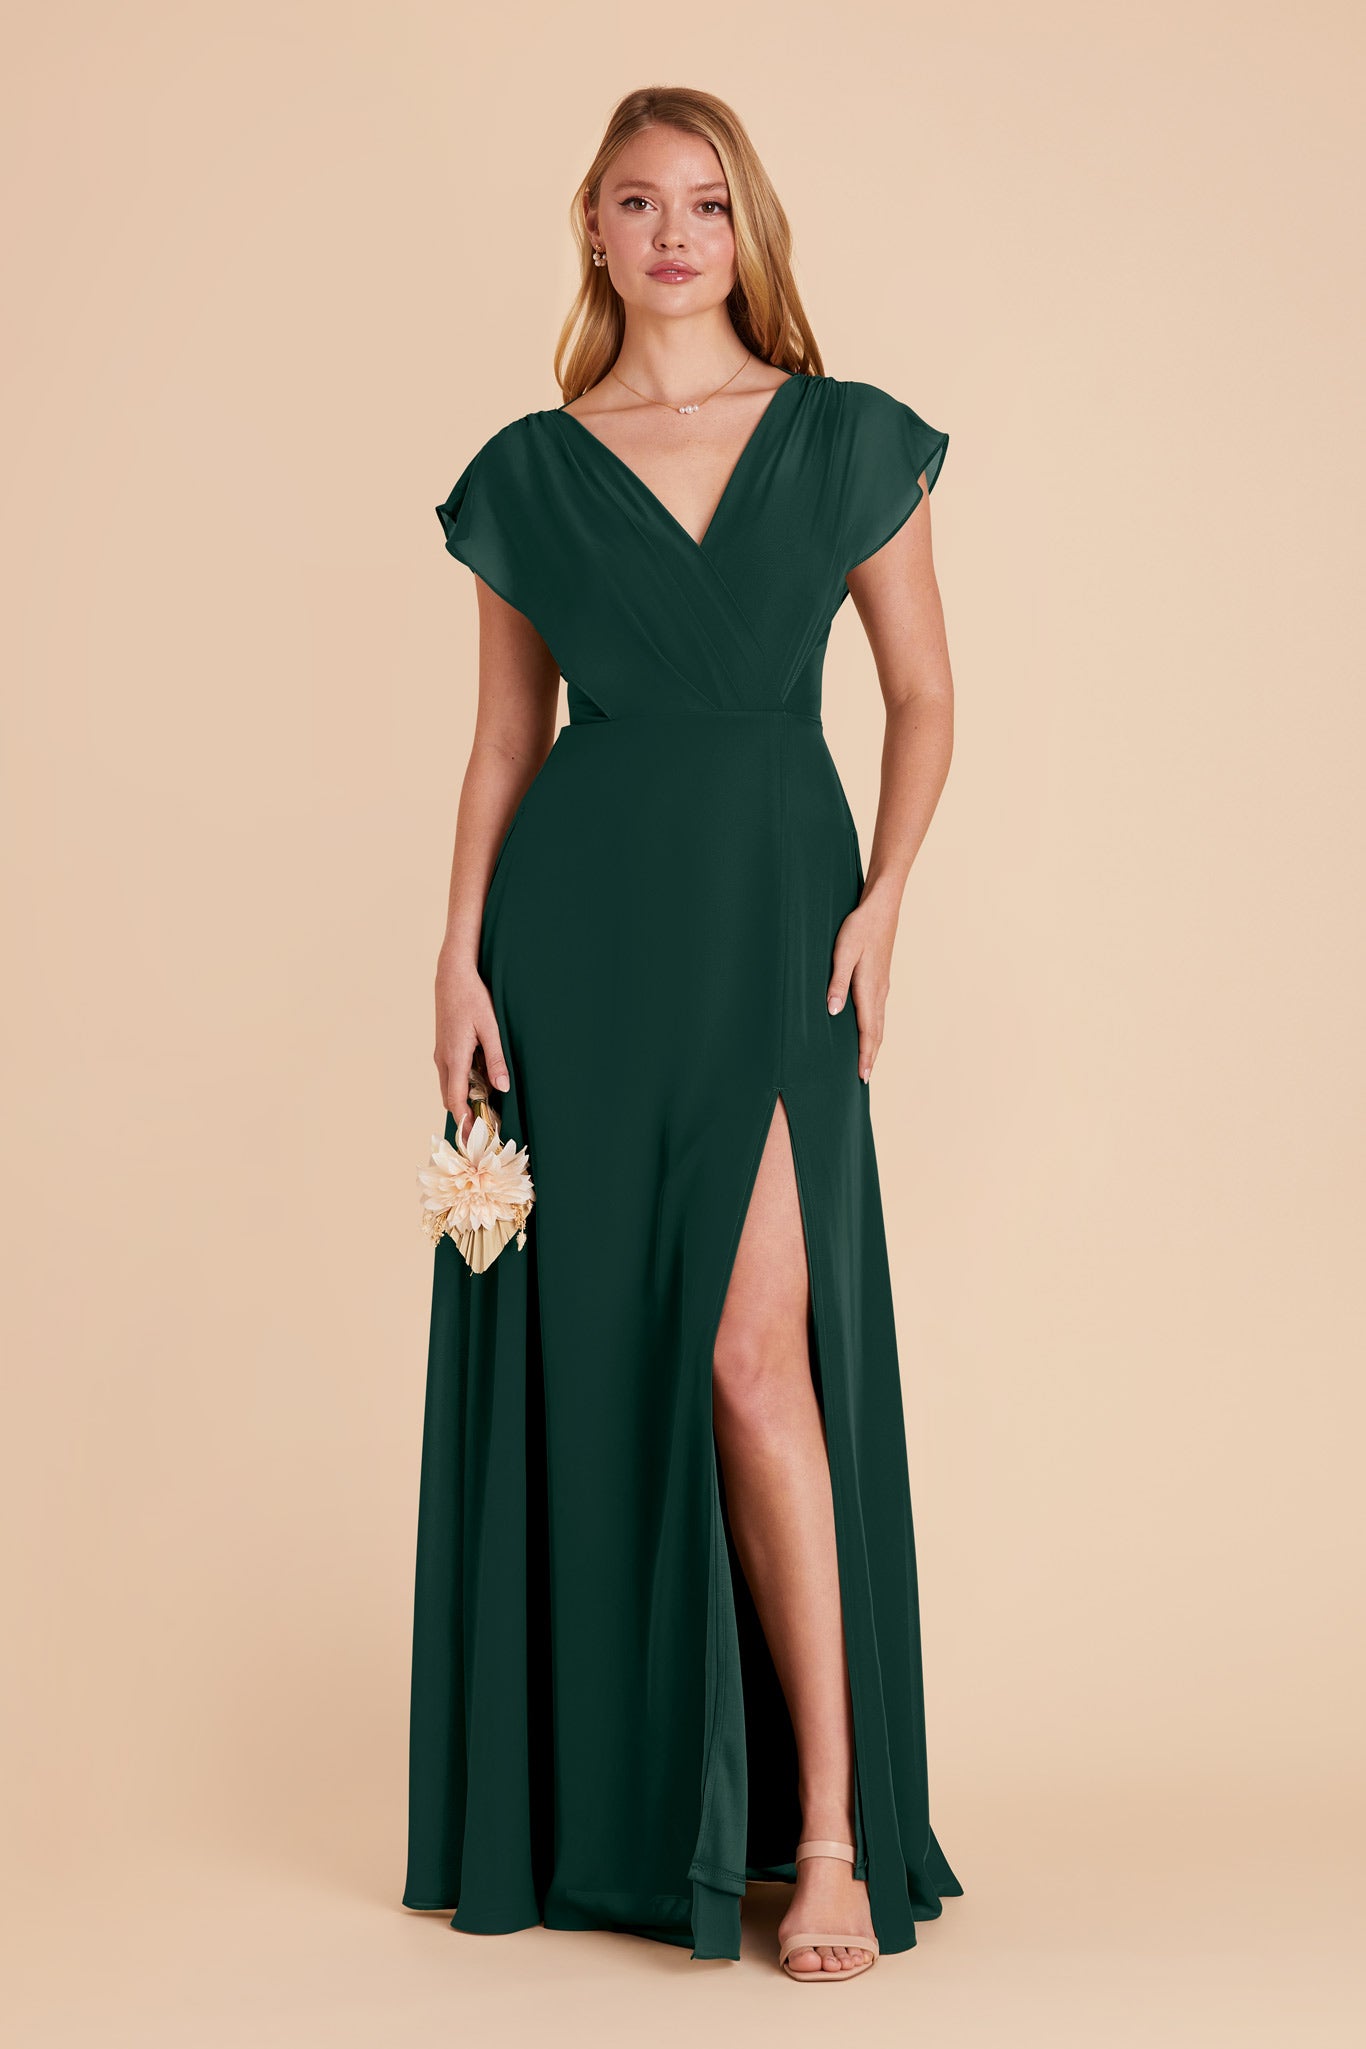 Matte Emerald Green Maxi Bridesmaid Dress | SilkFred